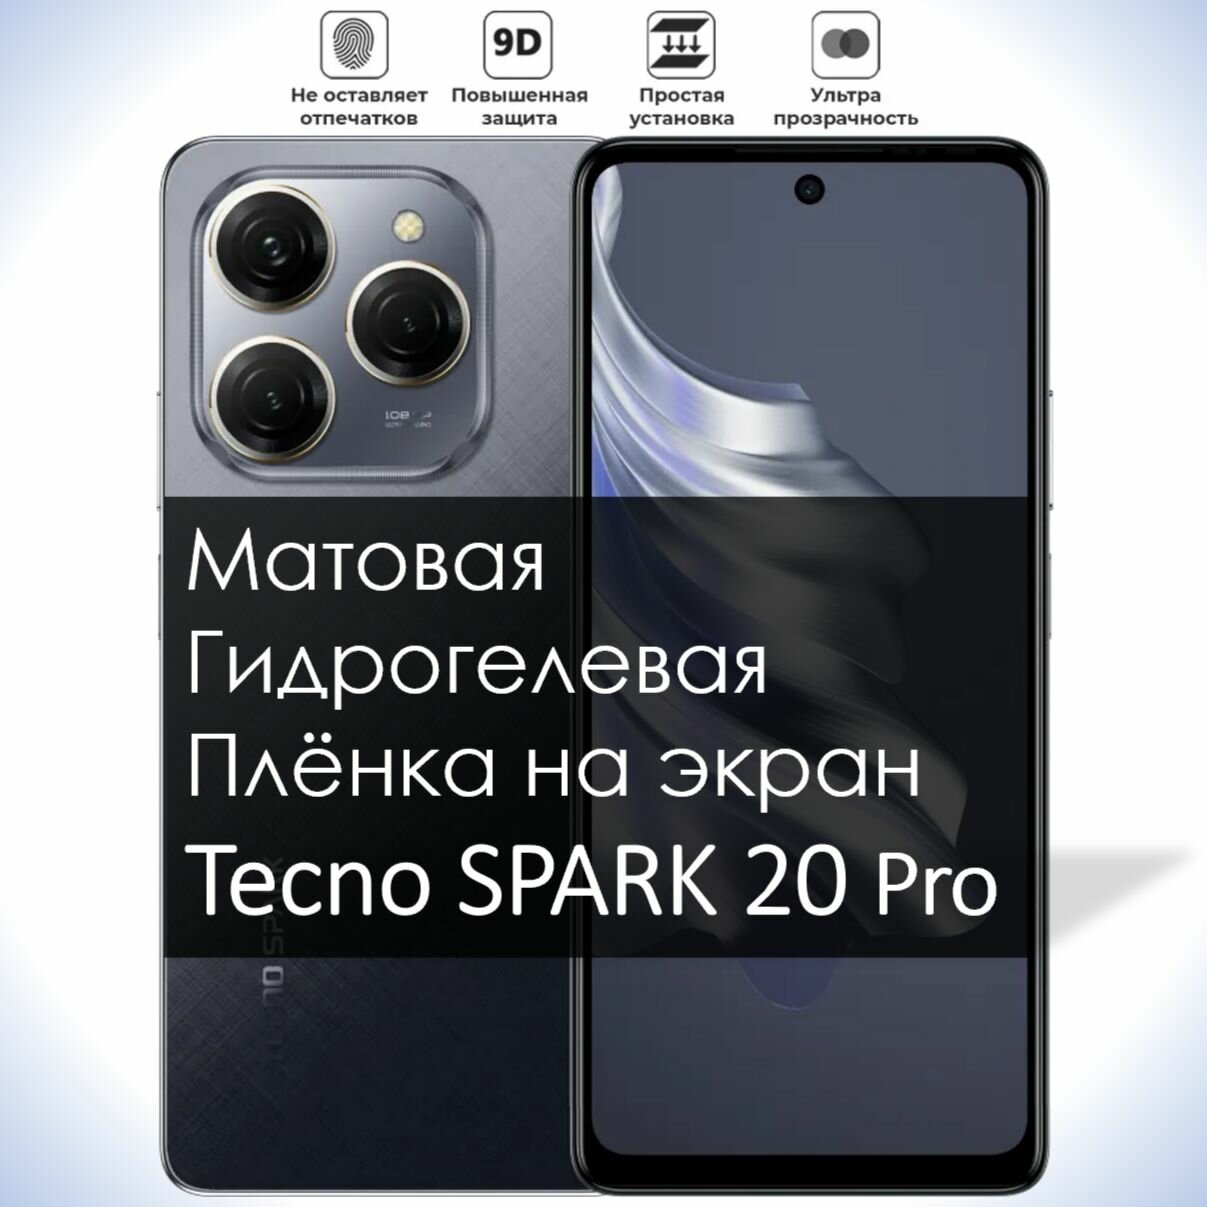 Гидрогелевая плёнка на экран Tecno Spark 20 Pro, Матовая долговечная премиум плёнка под чехол для Текно Спарк 20 Про